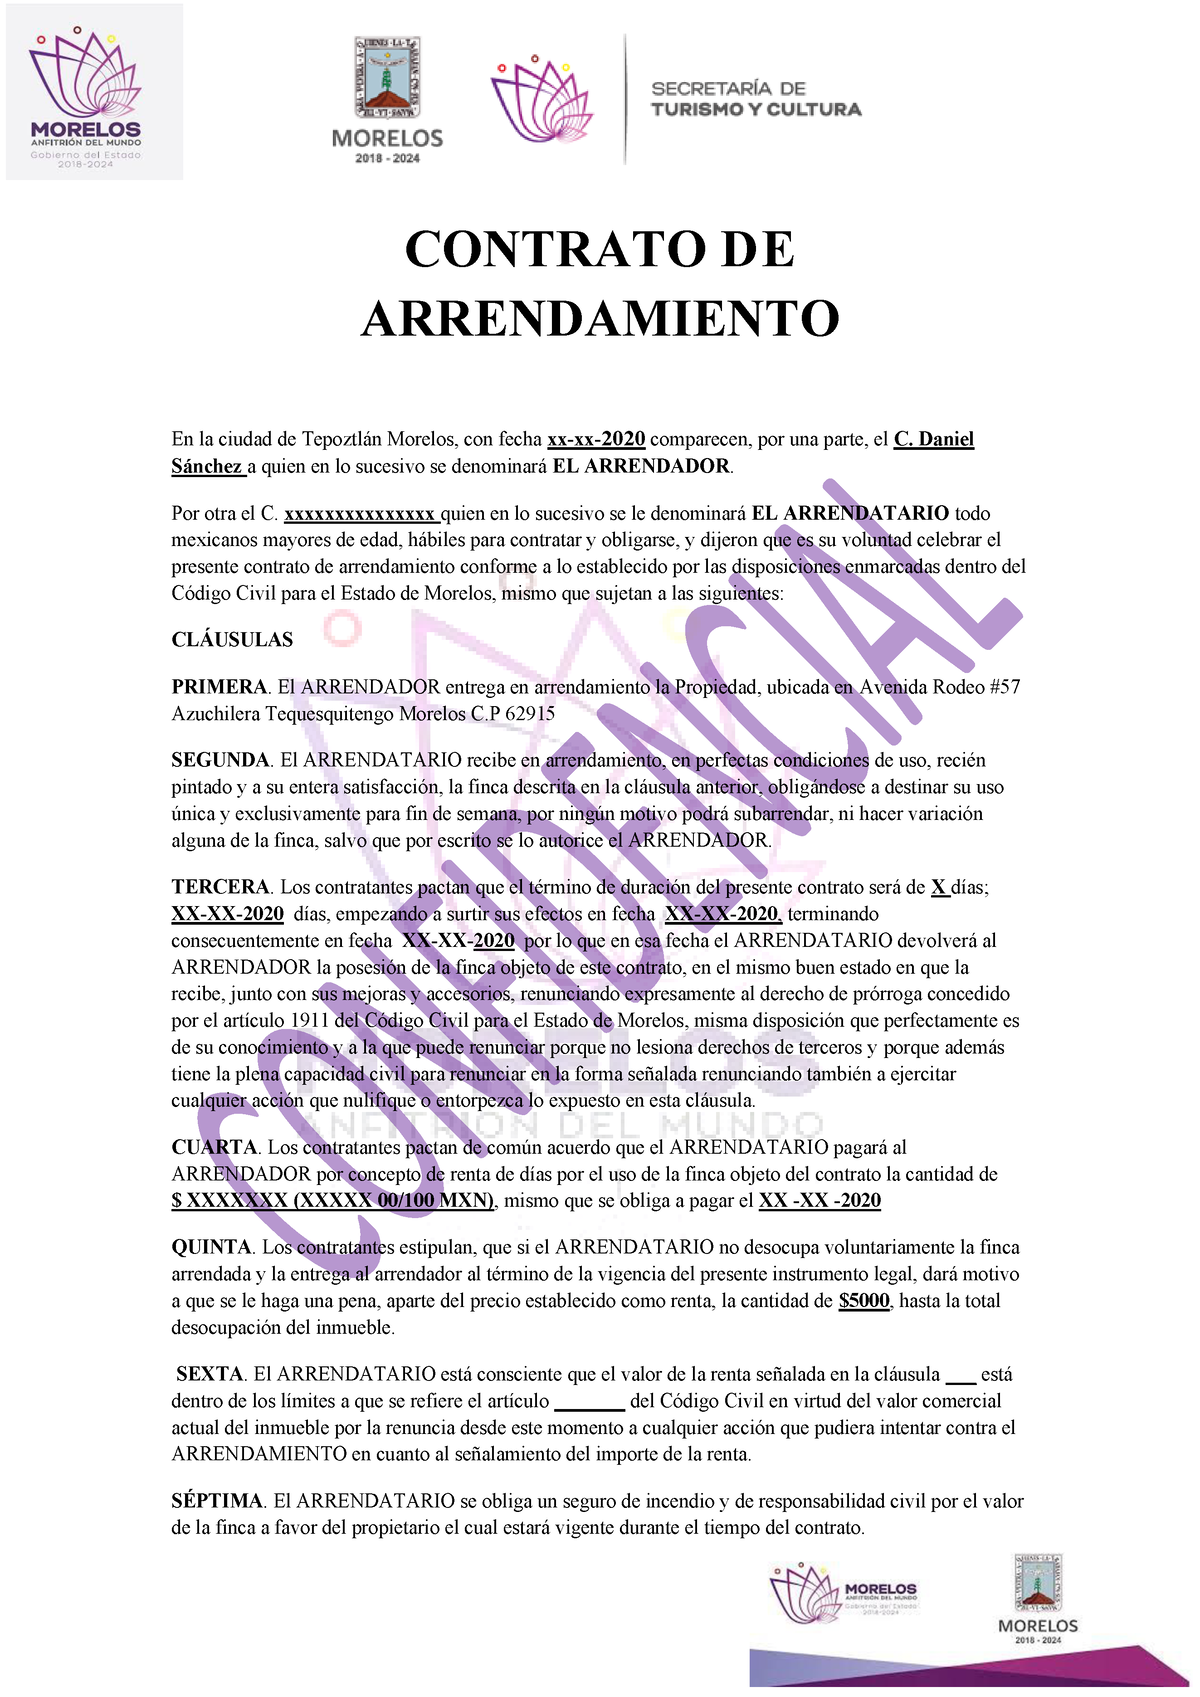 Contrato De Arrendamiento Tequesquitengo Morelos 1 Contrato D E Arrendamiento En La Ciudad De 7105